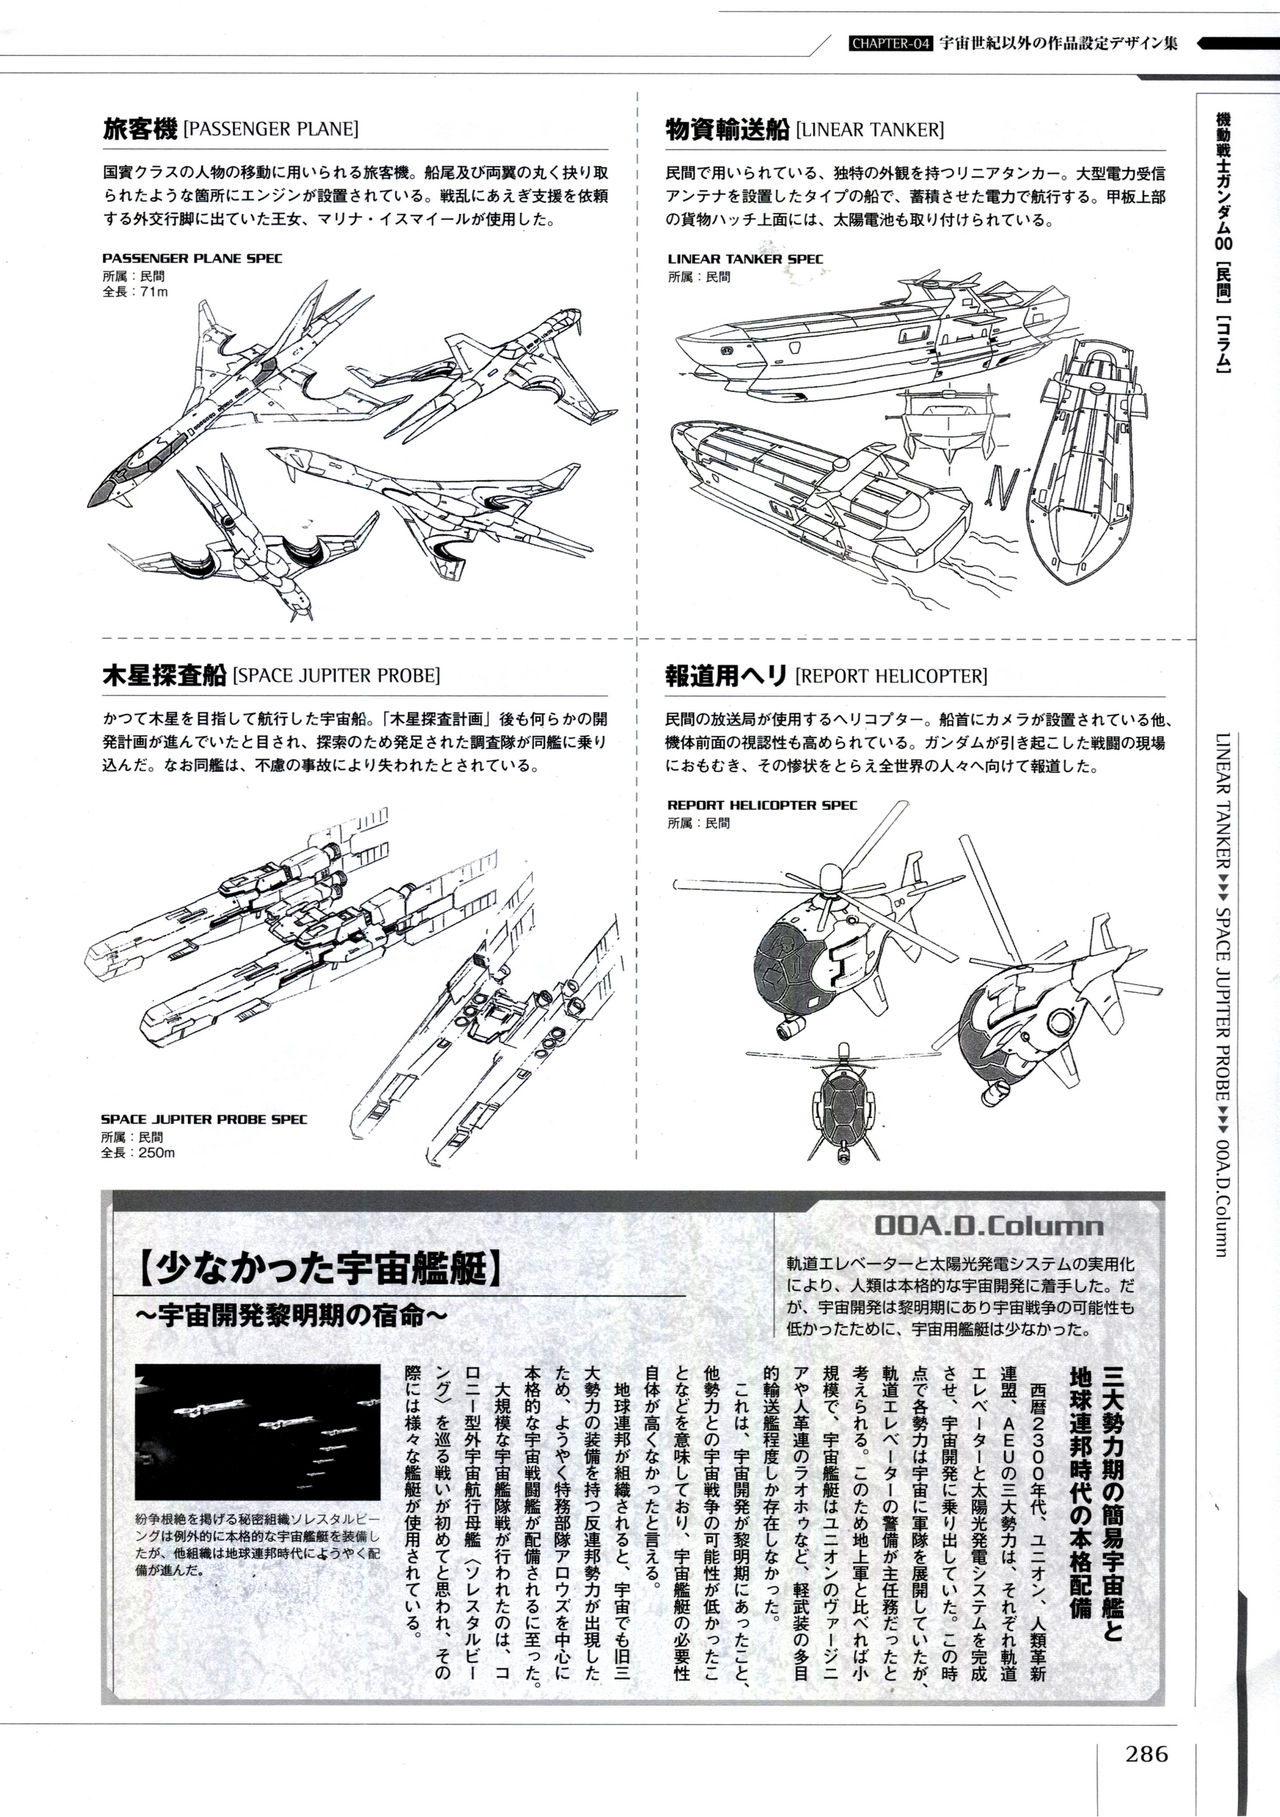 Mobile Suit Gundam - Ship & Aerospace Plane Encyclopedia - Revised Edition 291